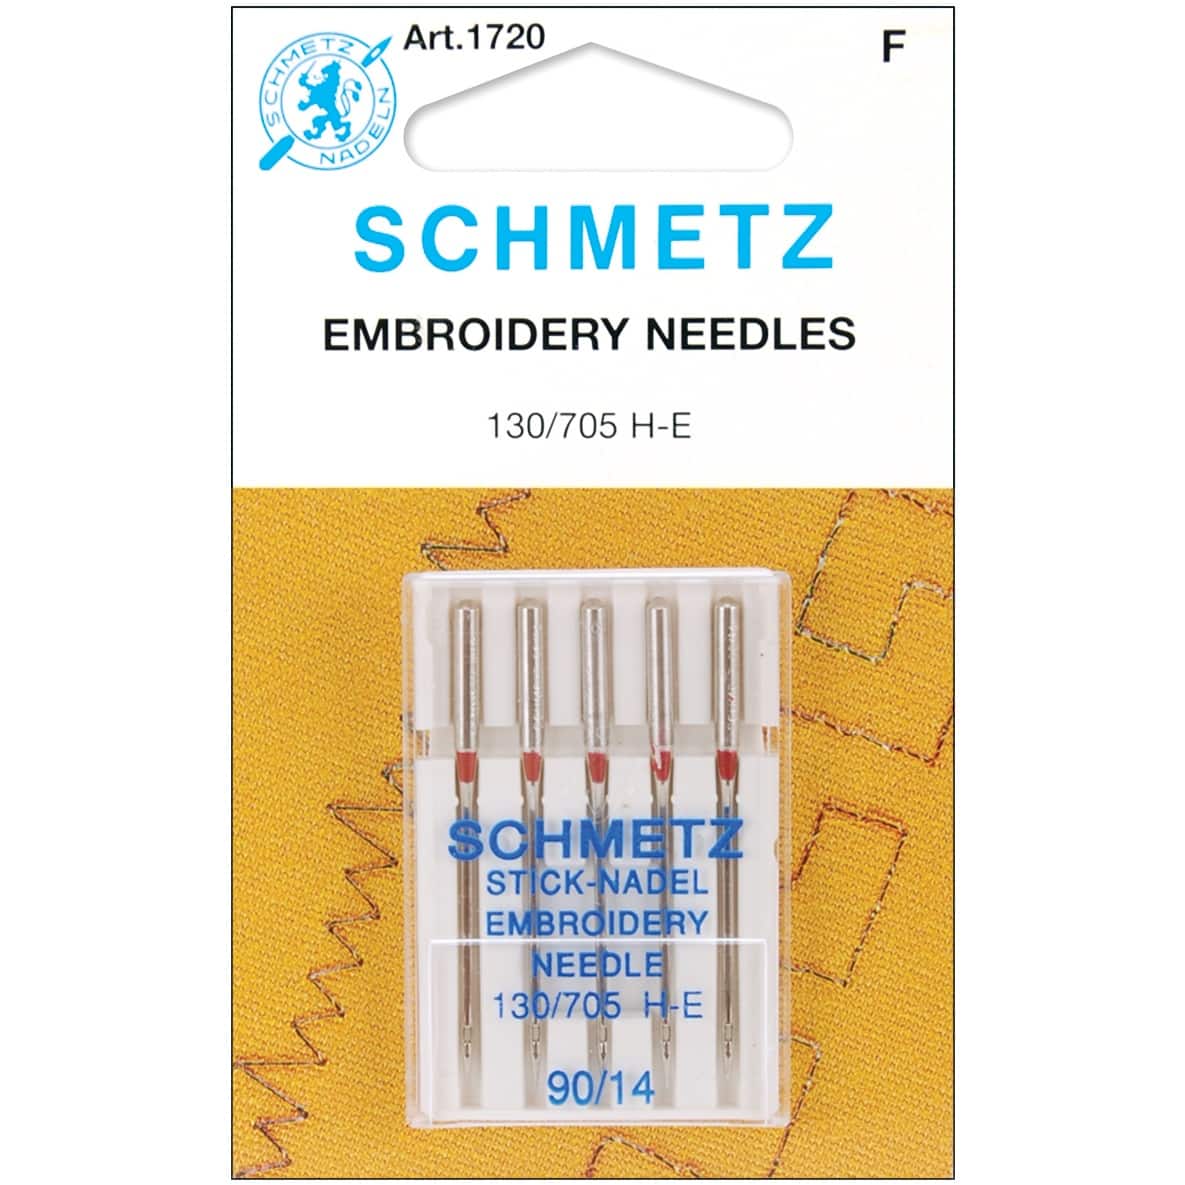 Euro-Notions Schmetz Embroidery Machine Needles, 14/90, 5ct.